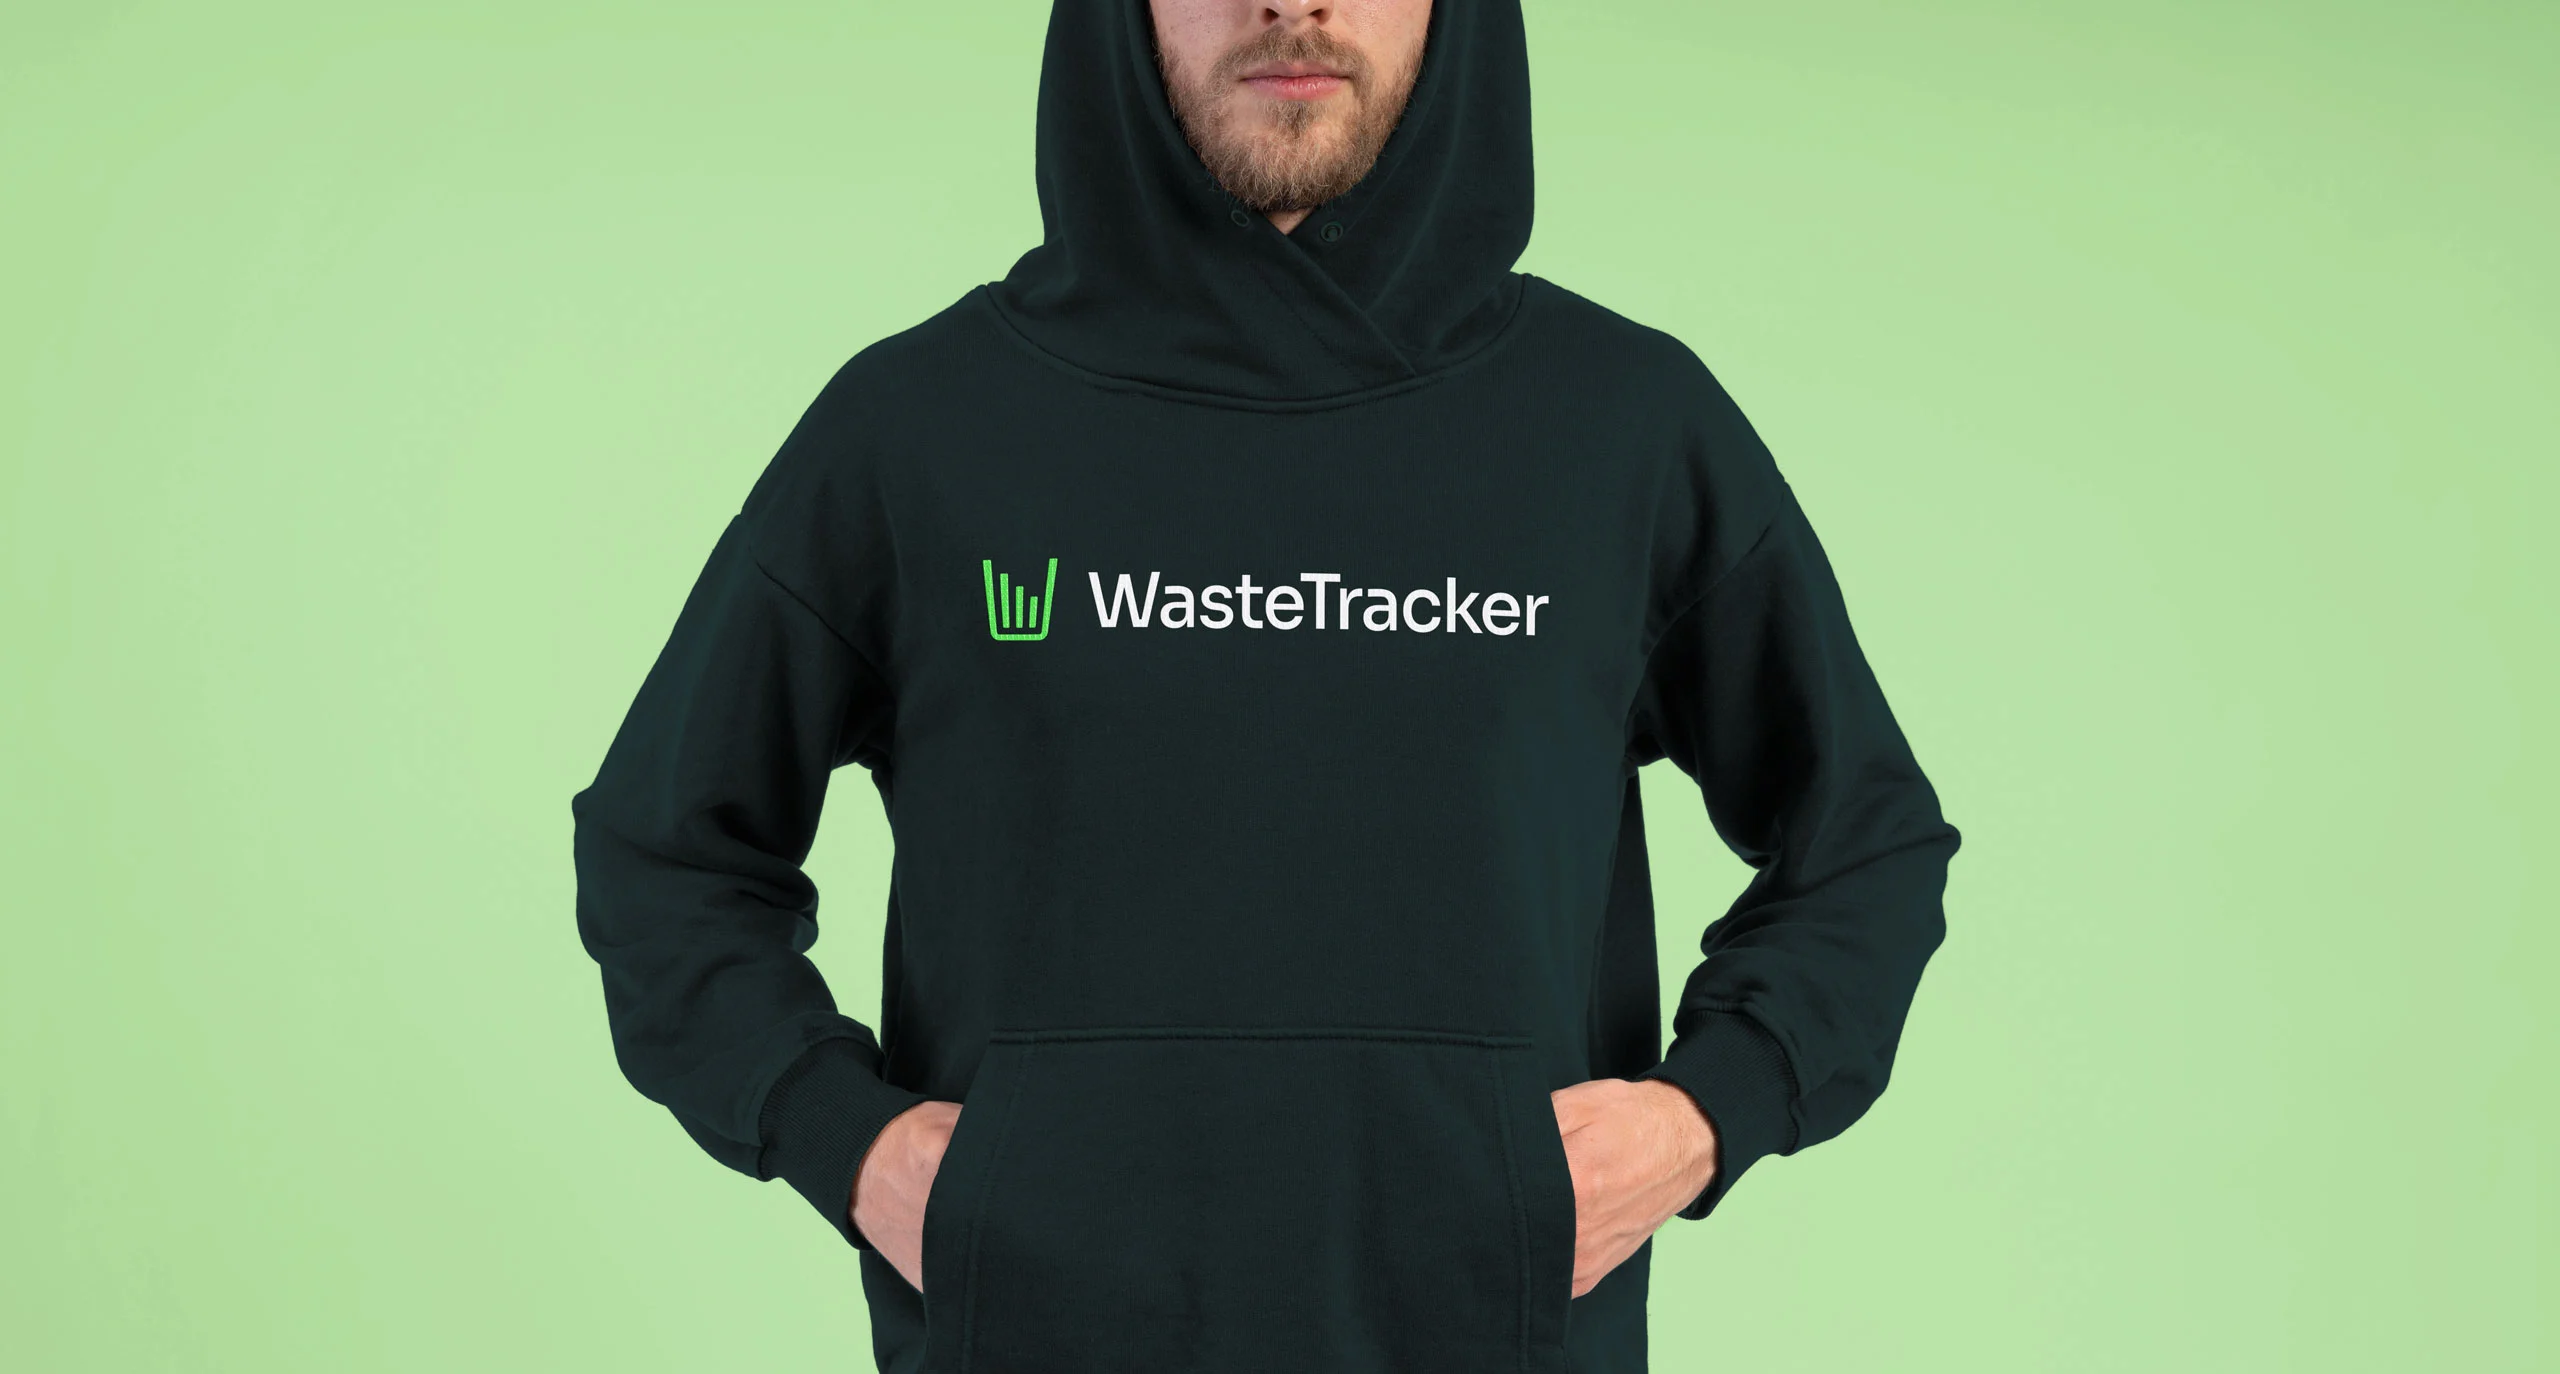 WasteTracker logo printed on a hoodie, demonstrating wearable branding.